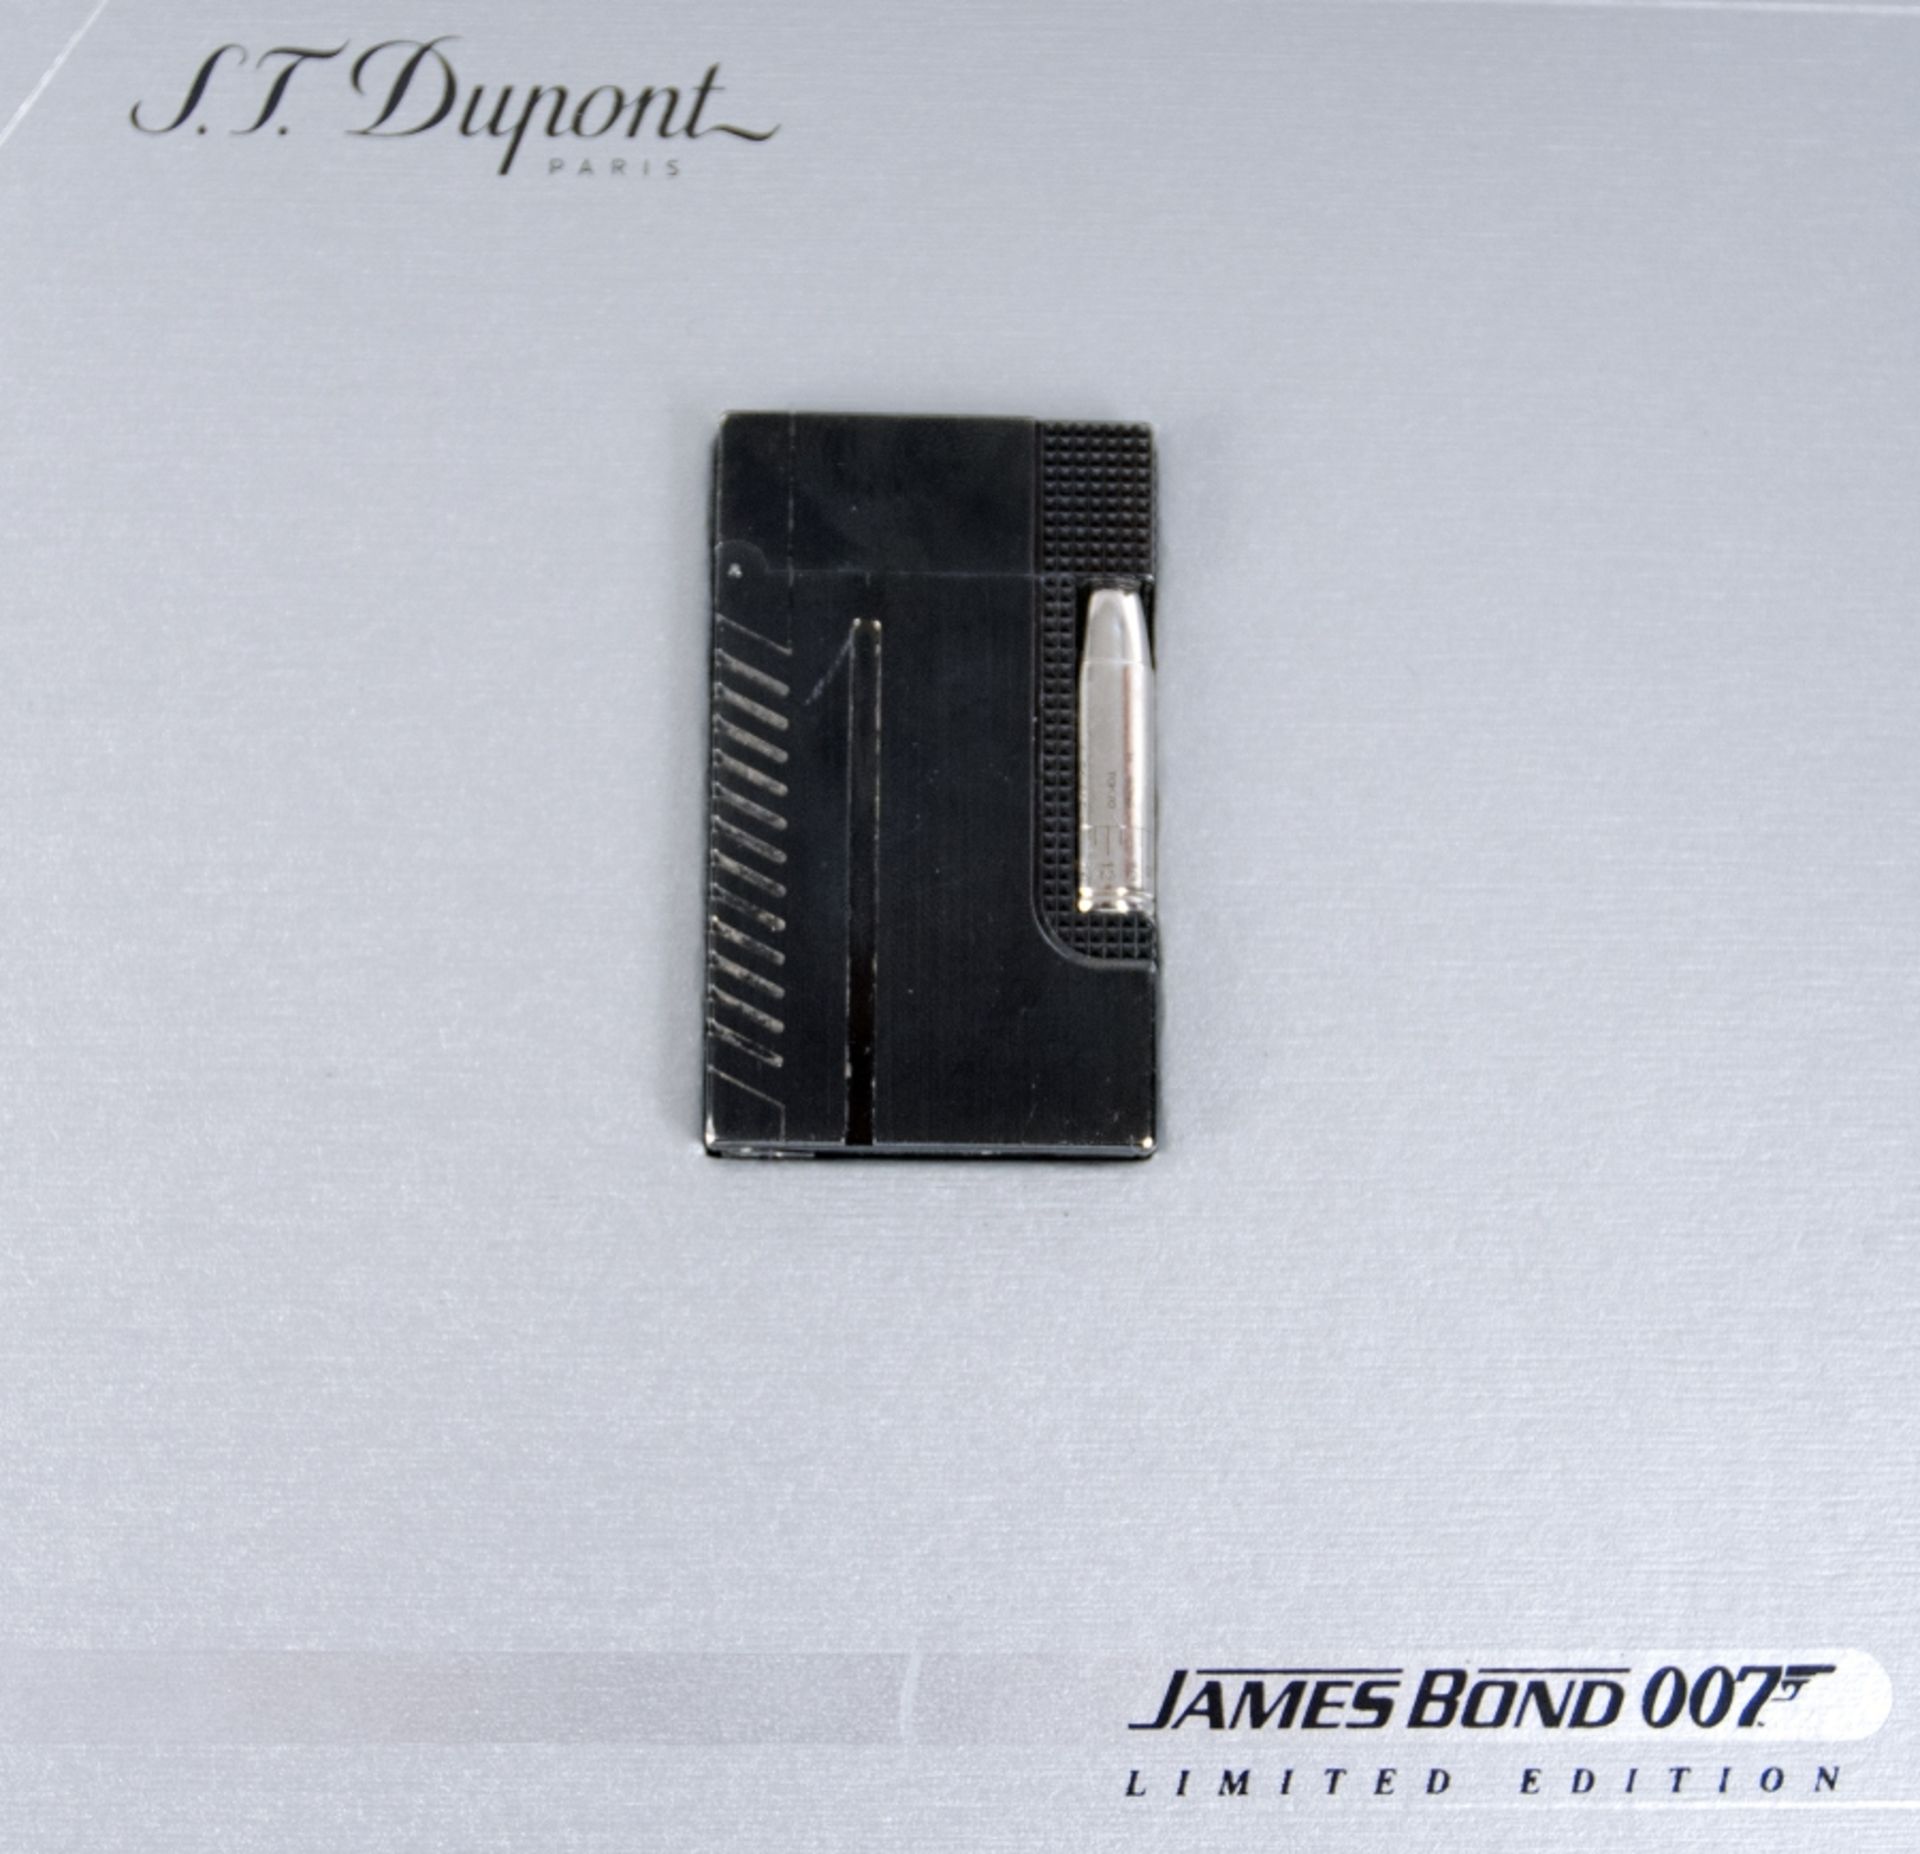 Dupont, S. T.:  James Bond 007 Limited Edition Feuerzeug - Image 2 of 3